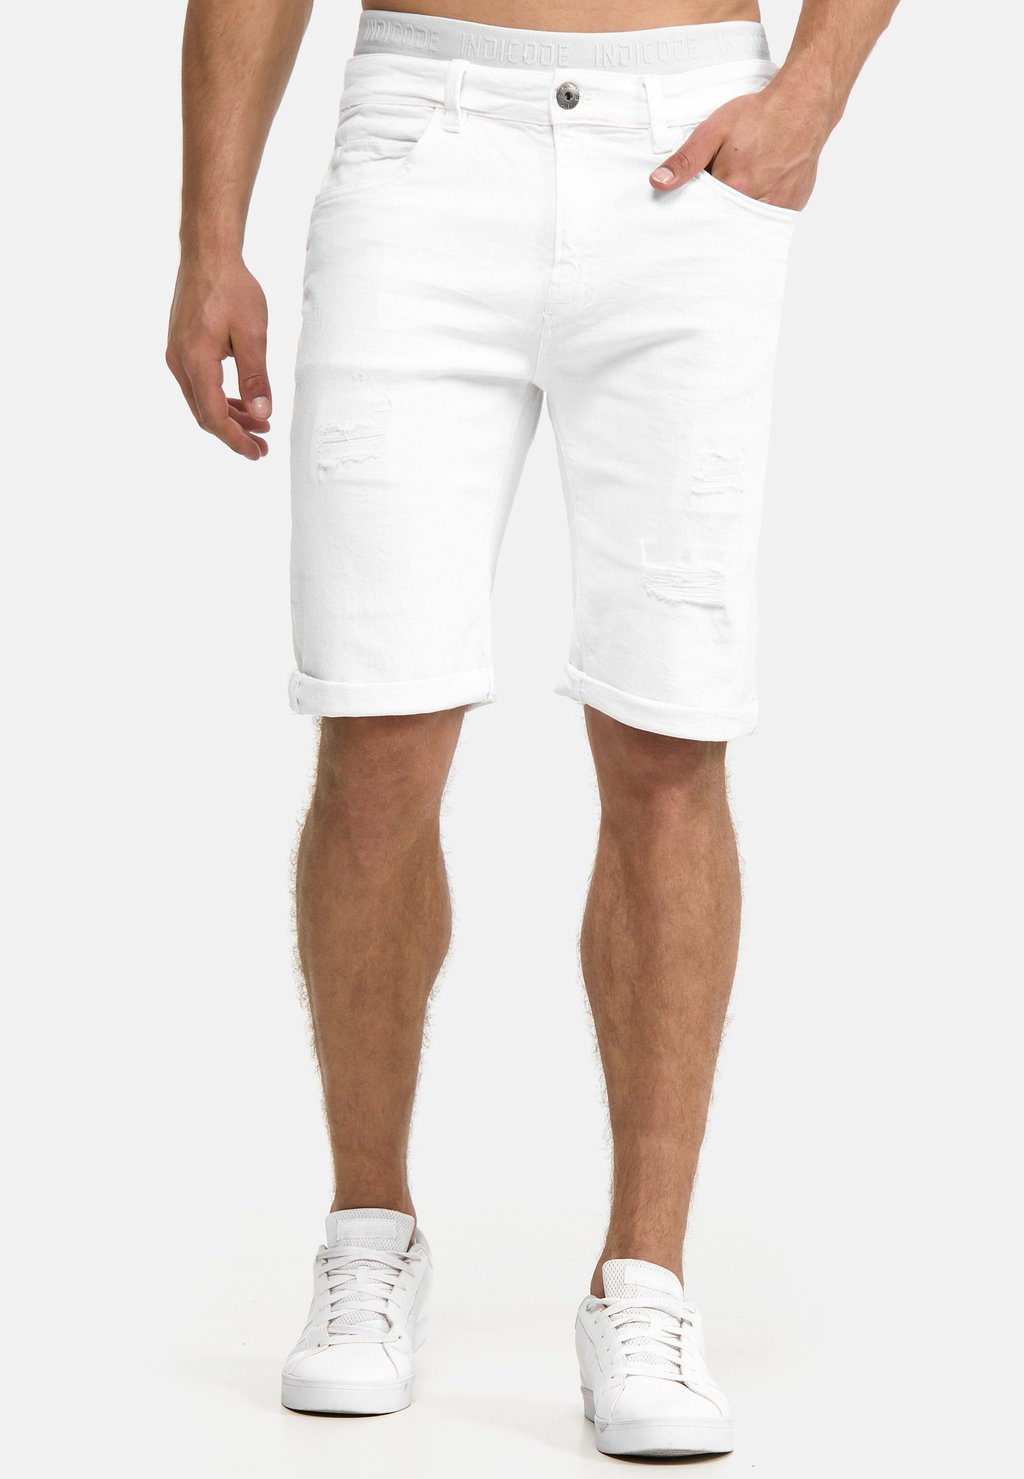 Шорты джинсовые CUBA CADEN INDICODE JEANS, цвет off-white футболка базовая tony indicode jeans цвет off white